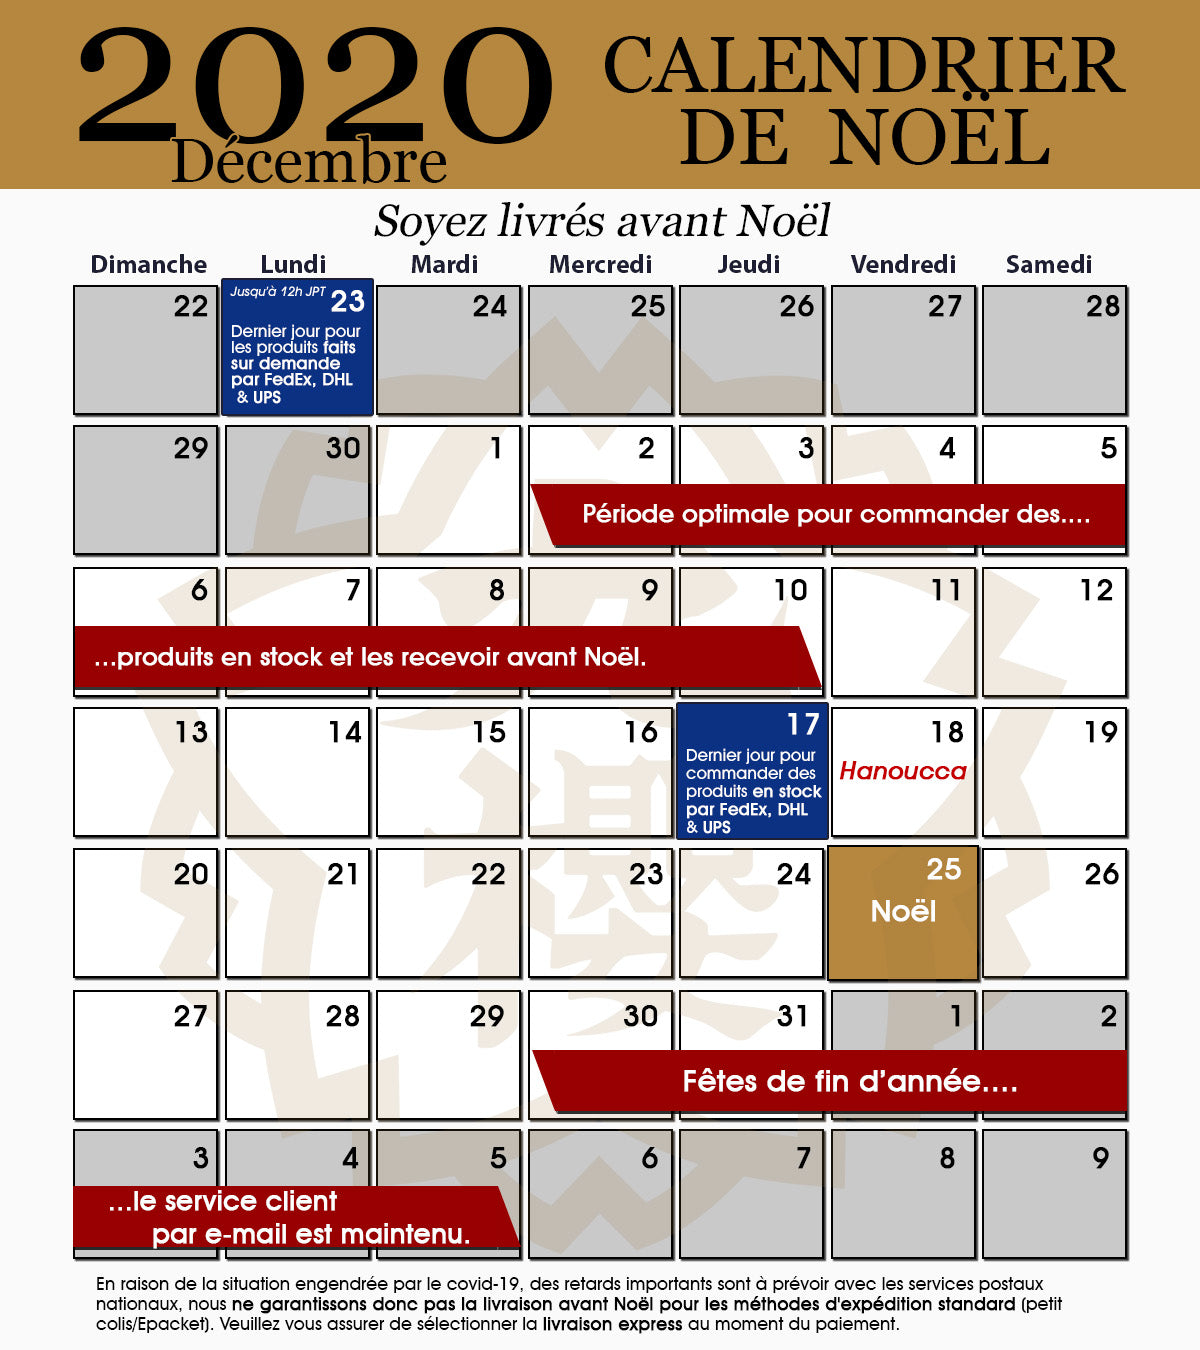 Christmas Calendar 2020